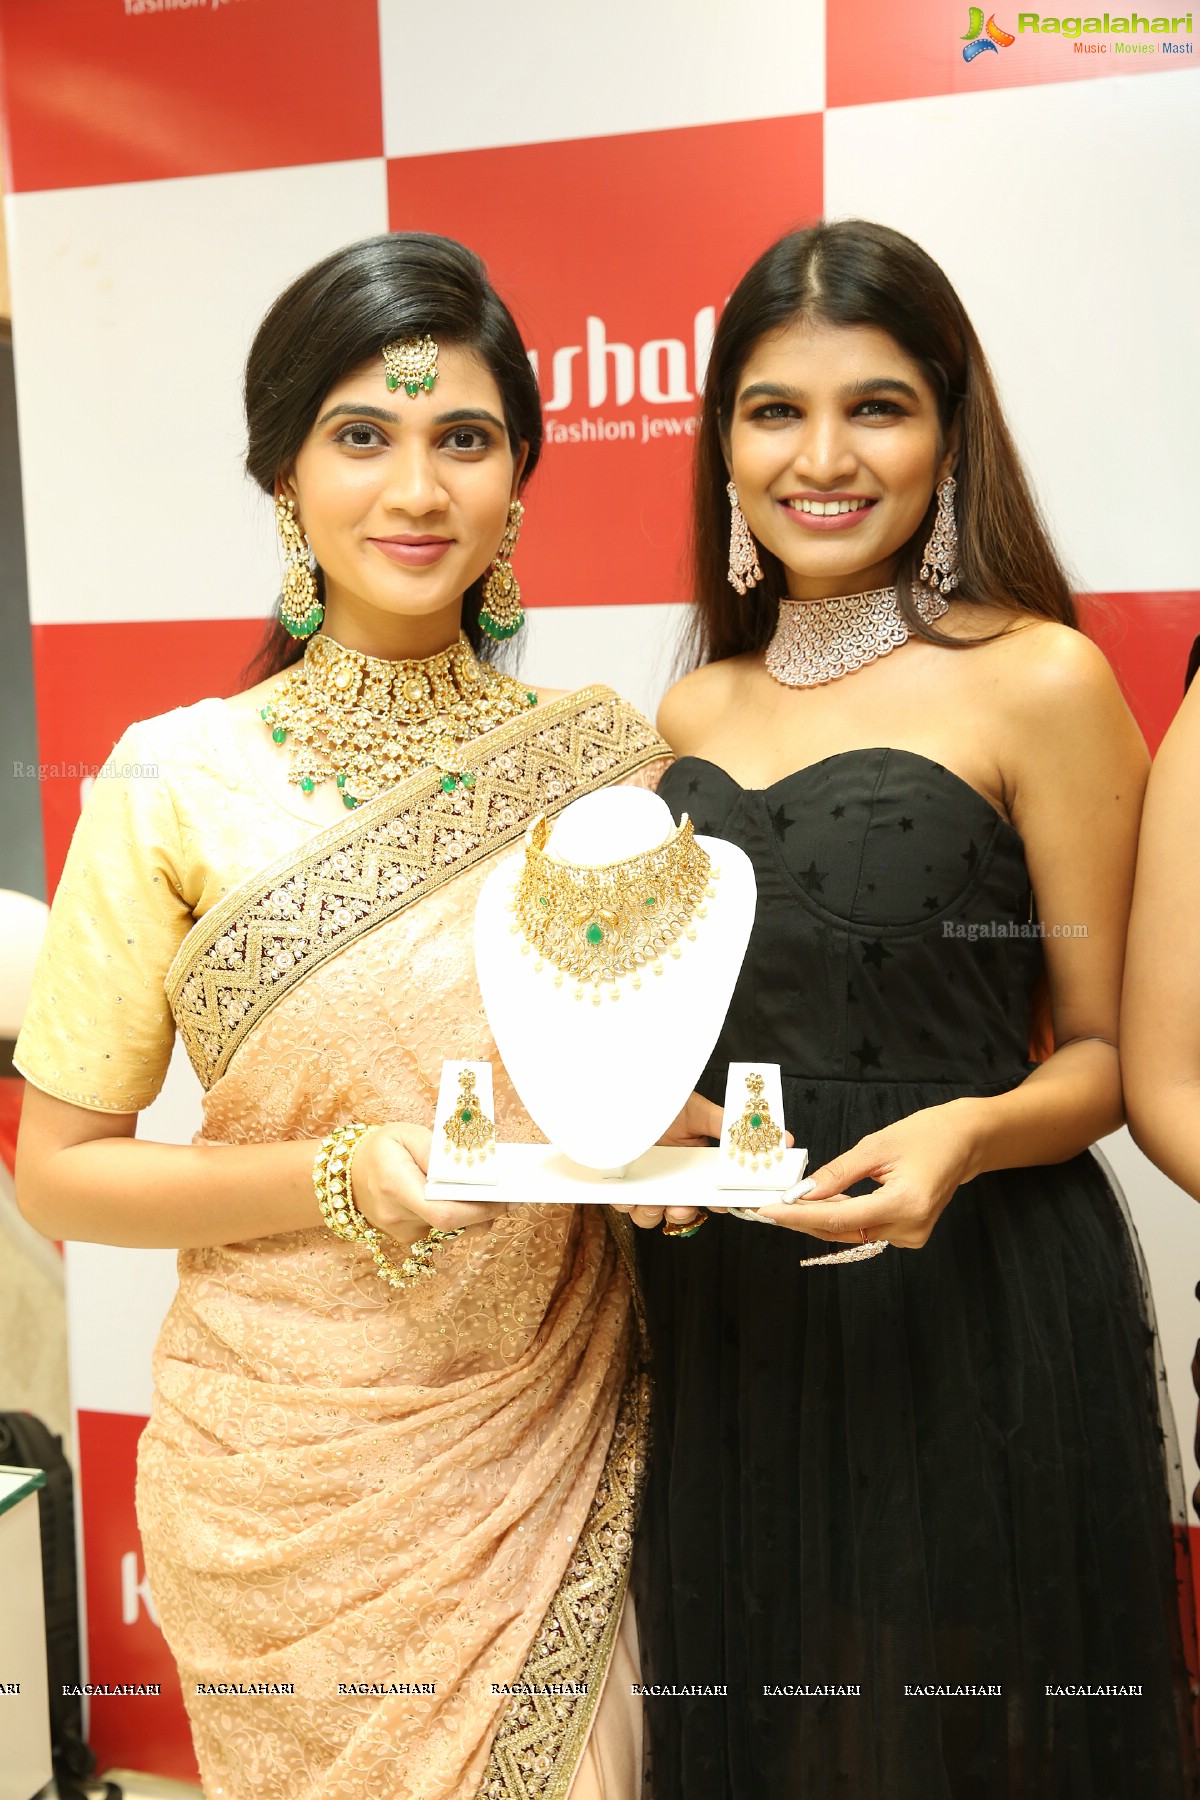 Kushal’s Fashion Jewellery Launches Its Flagship Store at Himayatnagar